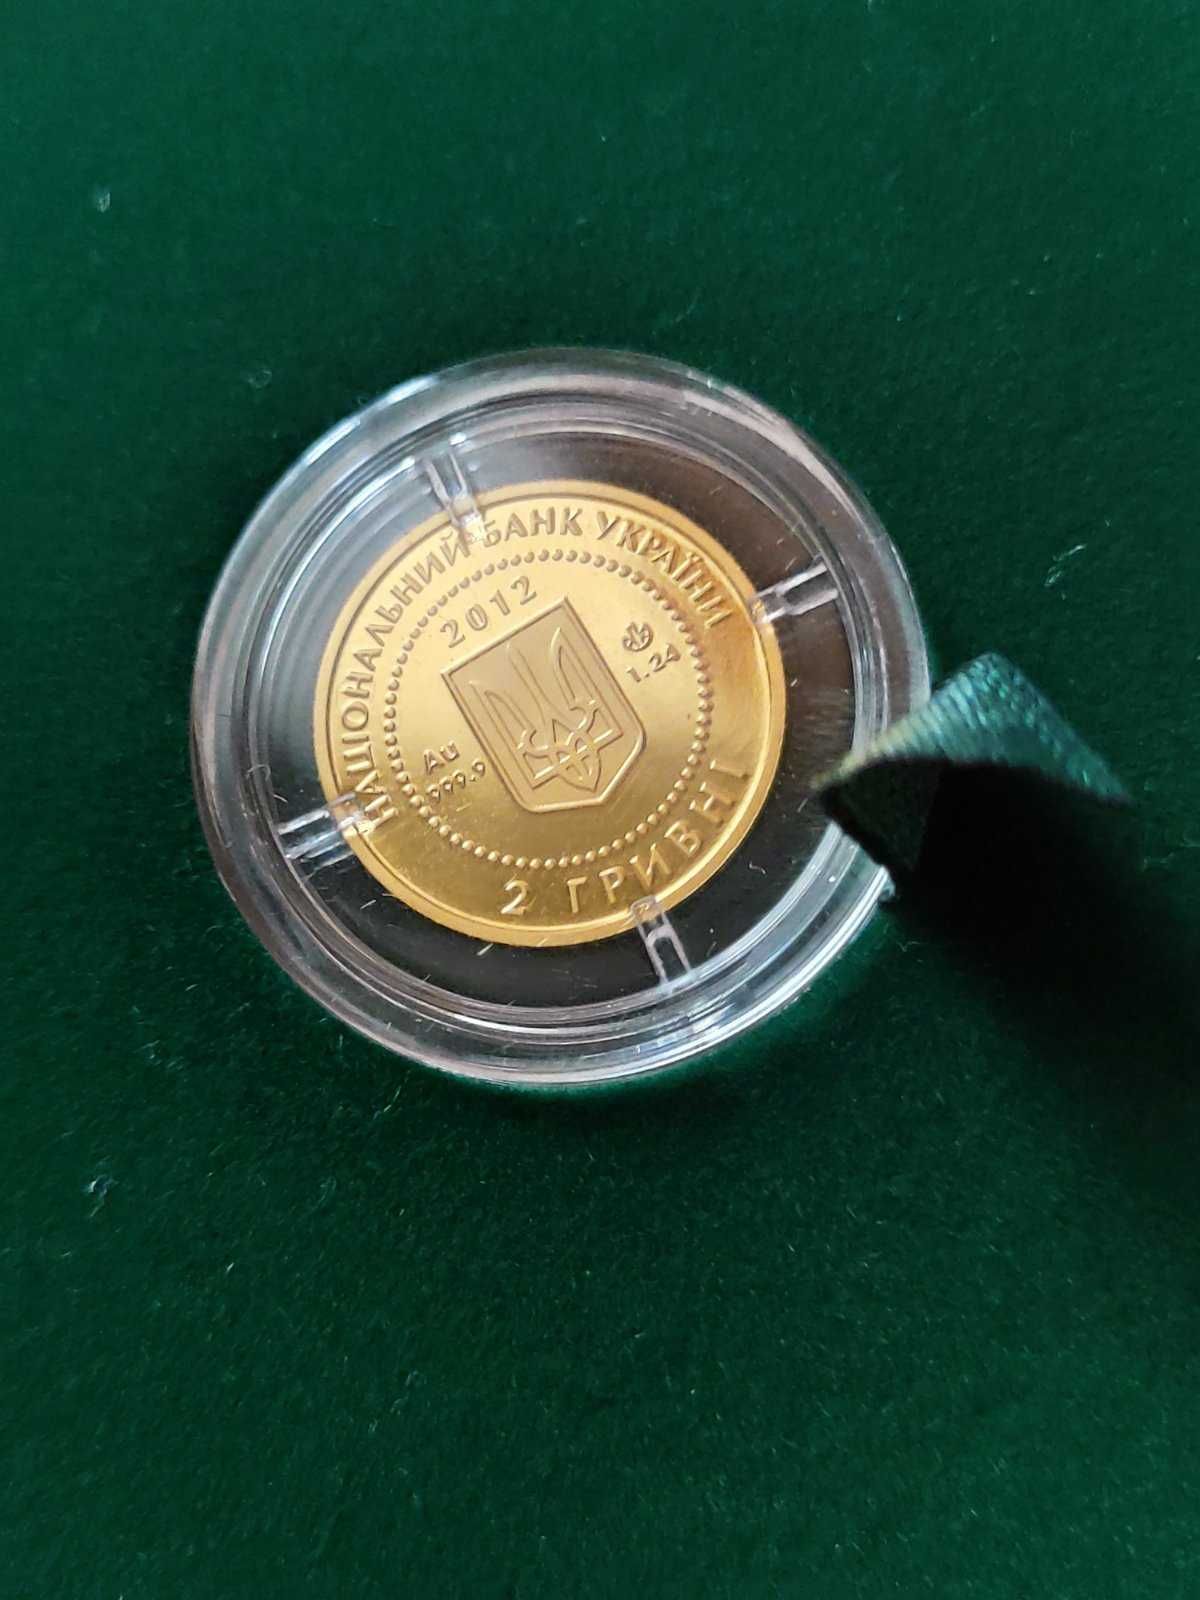 Золота Монета НБУ України Мальва 2 гривні 2012 рік золото